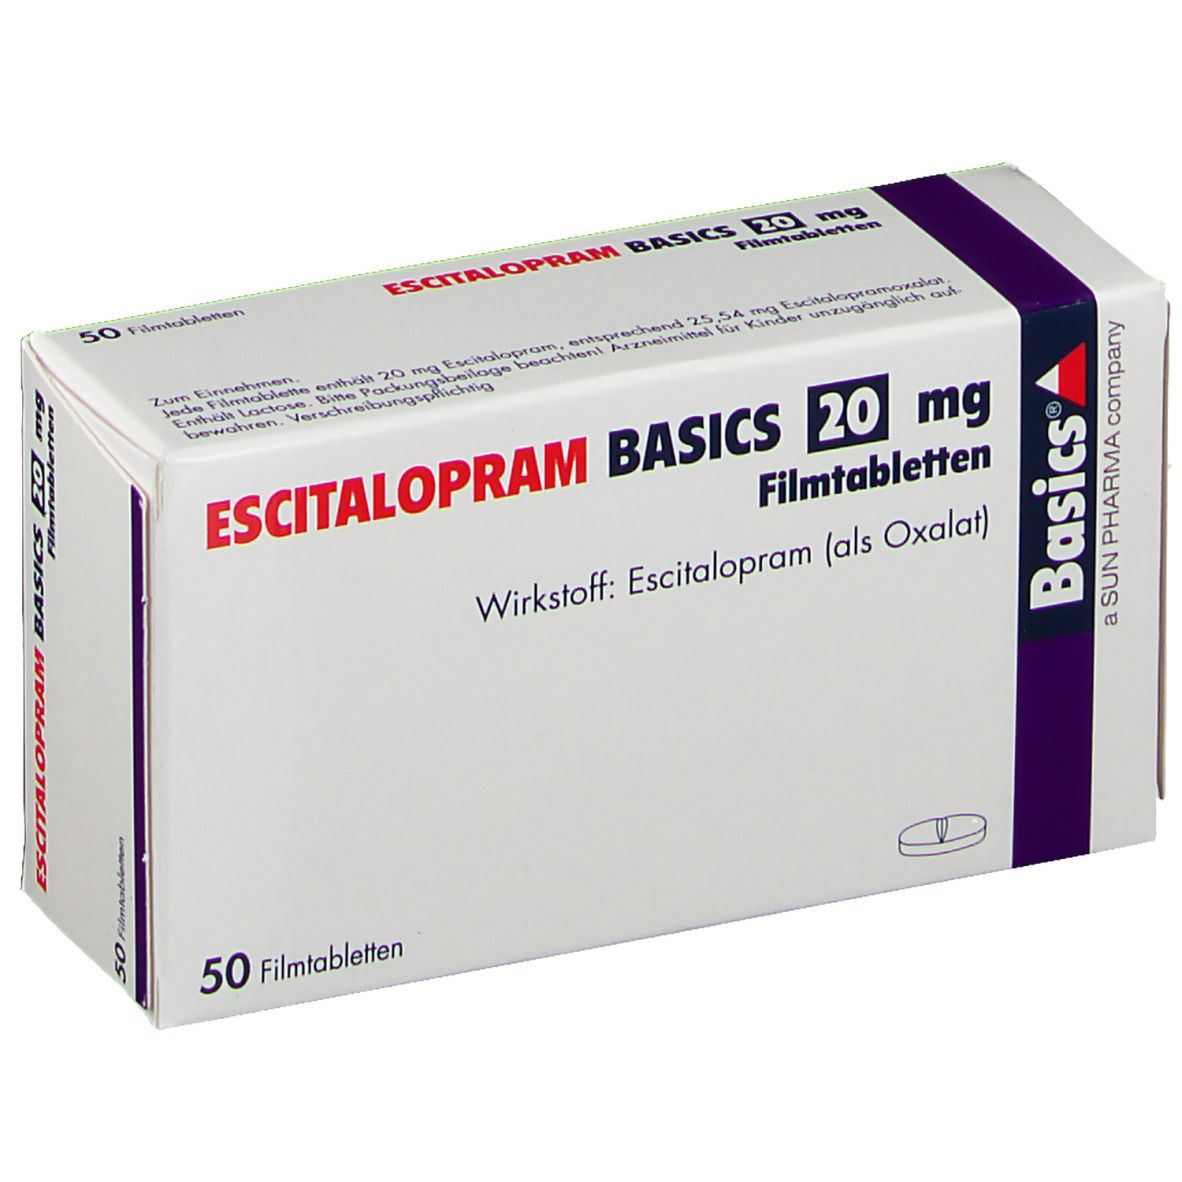 ESCITALOPRAM BASICS 20 mg